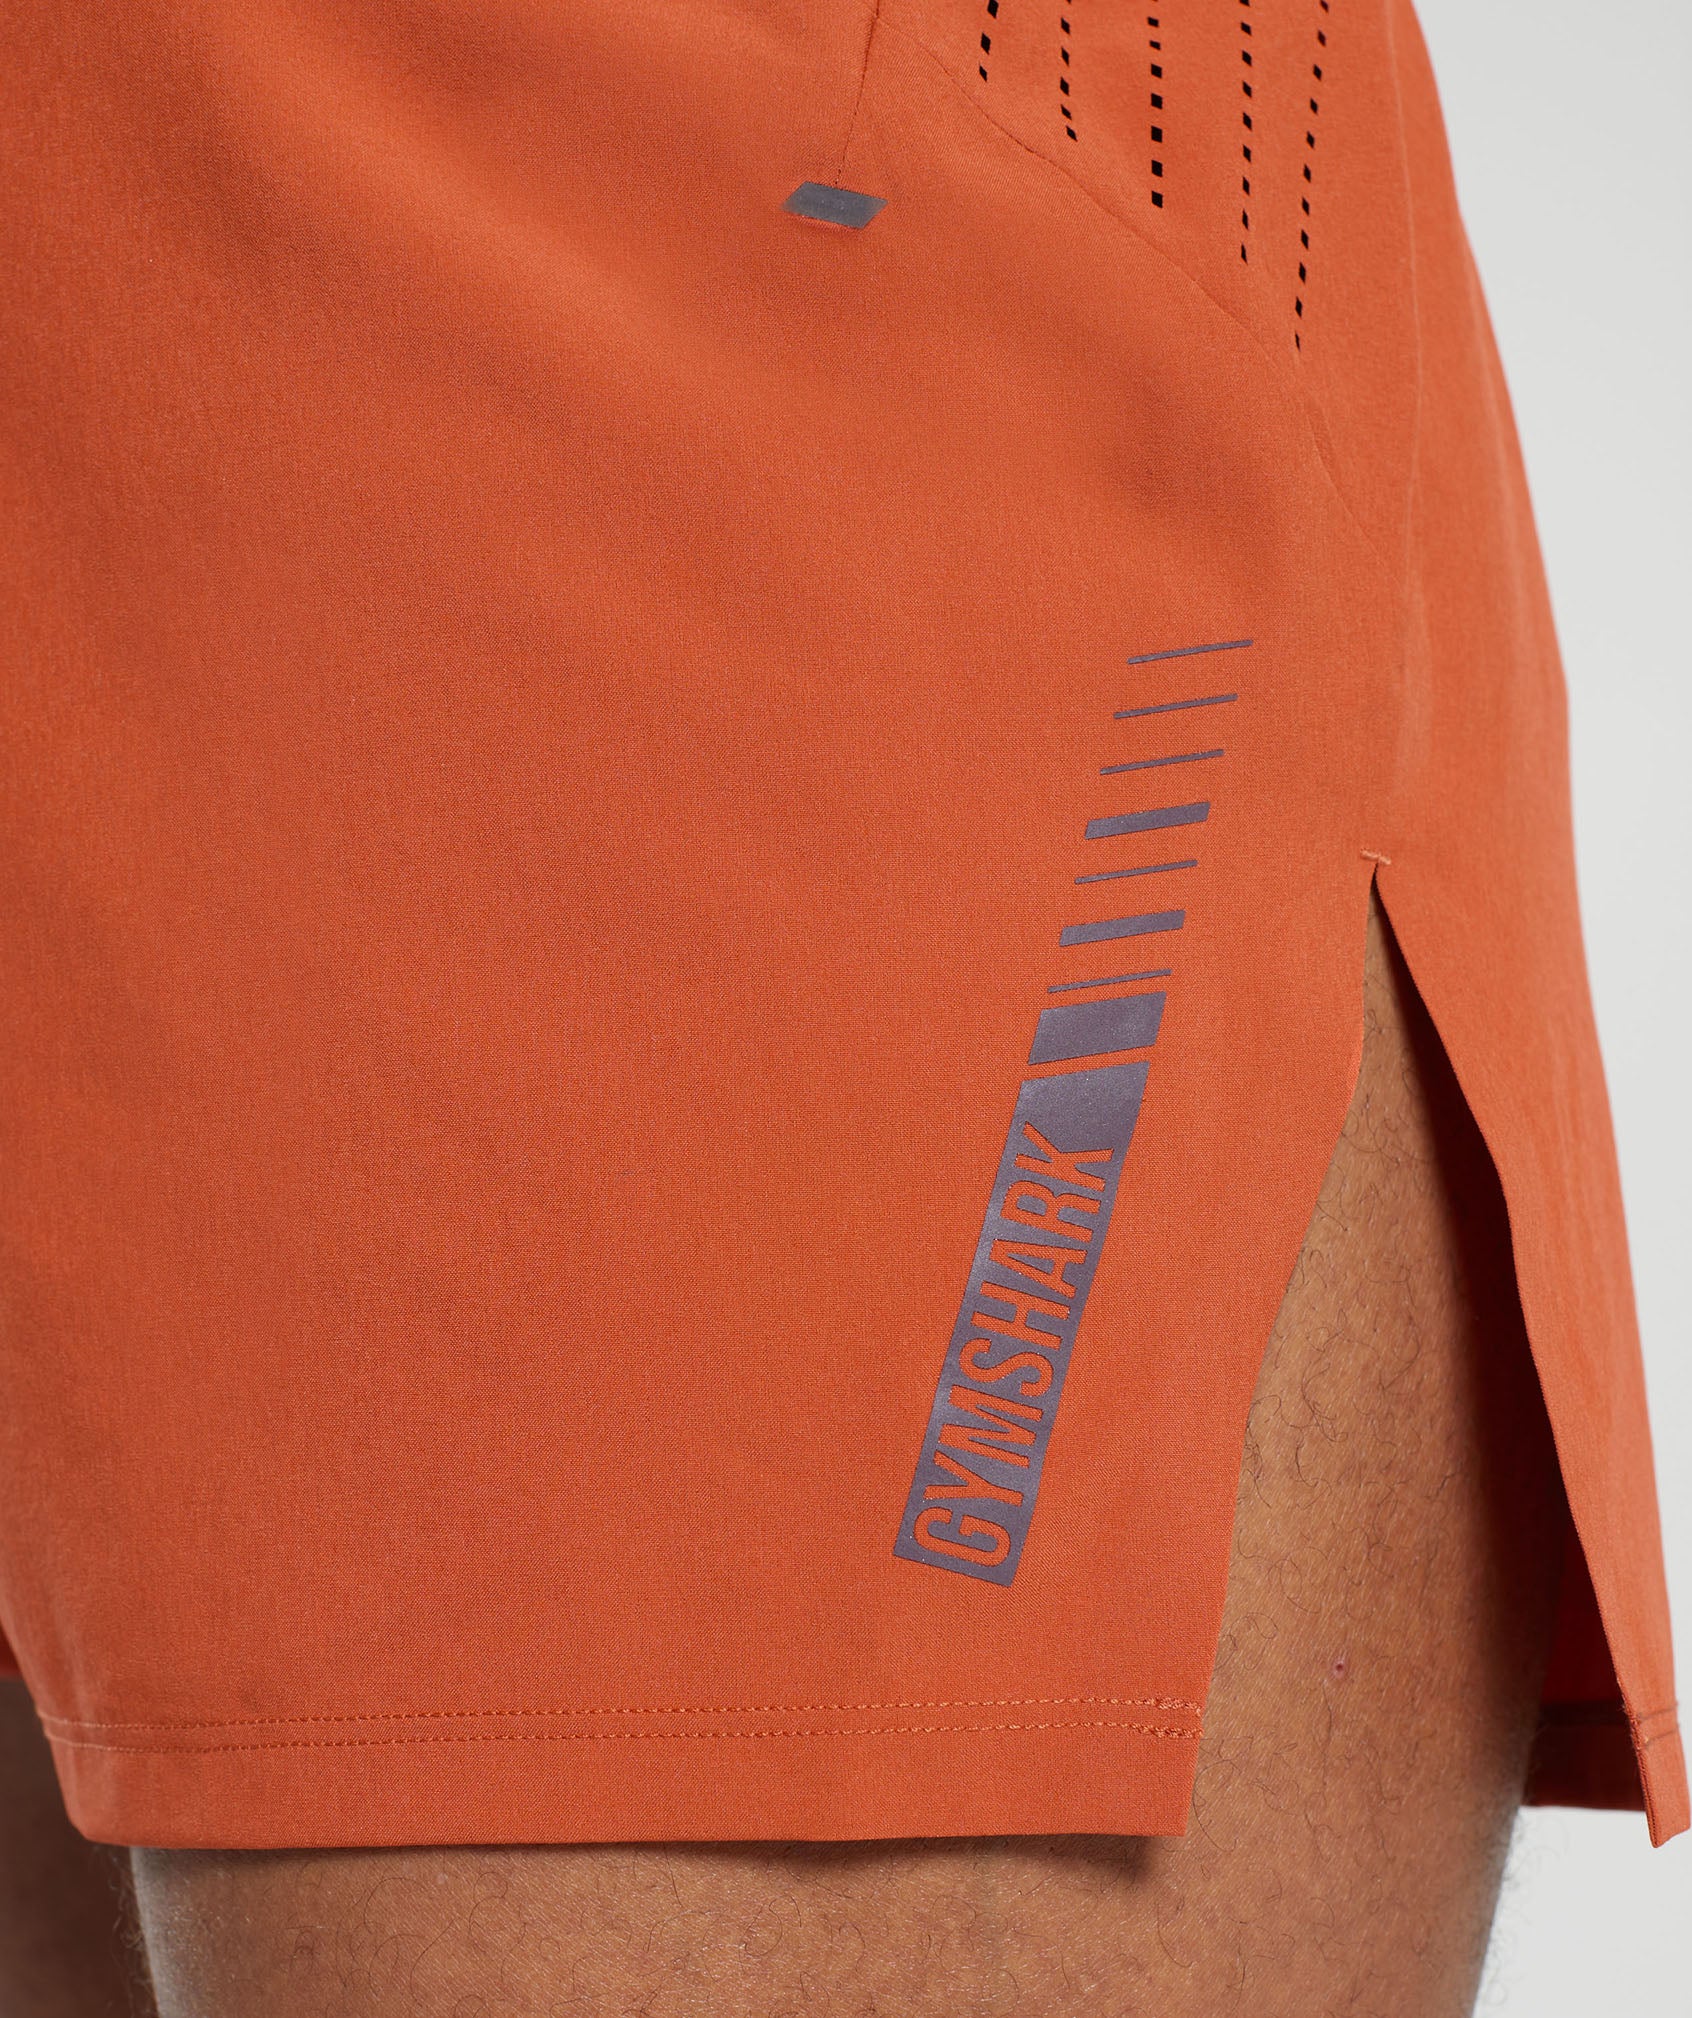 Apex Run 4" Shorts in Rust Orange - view 6